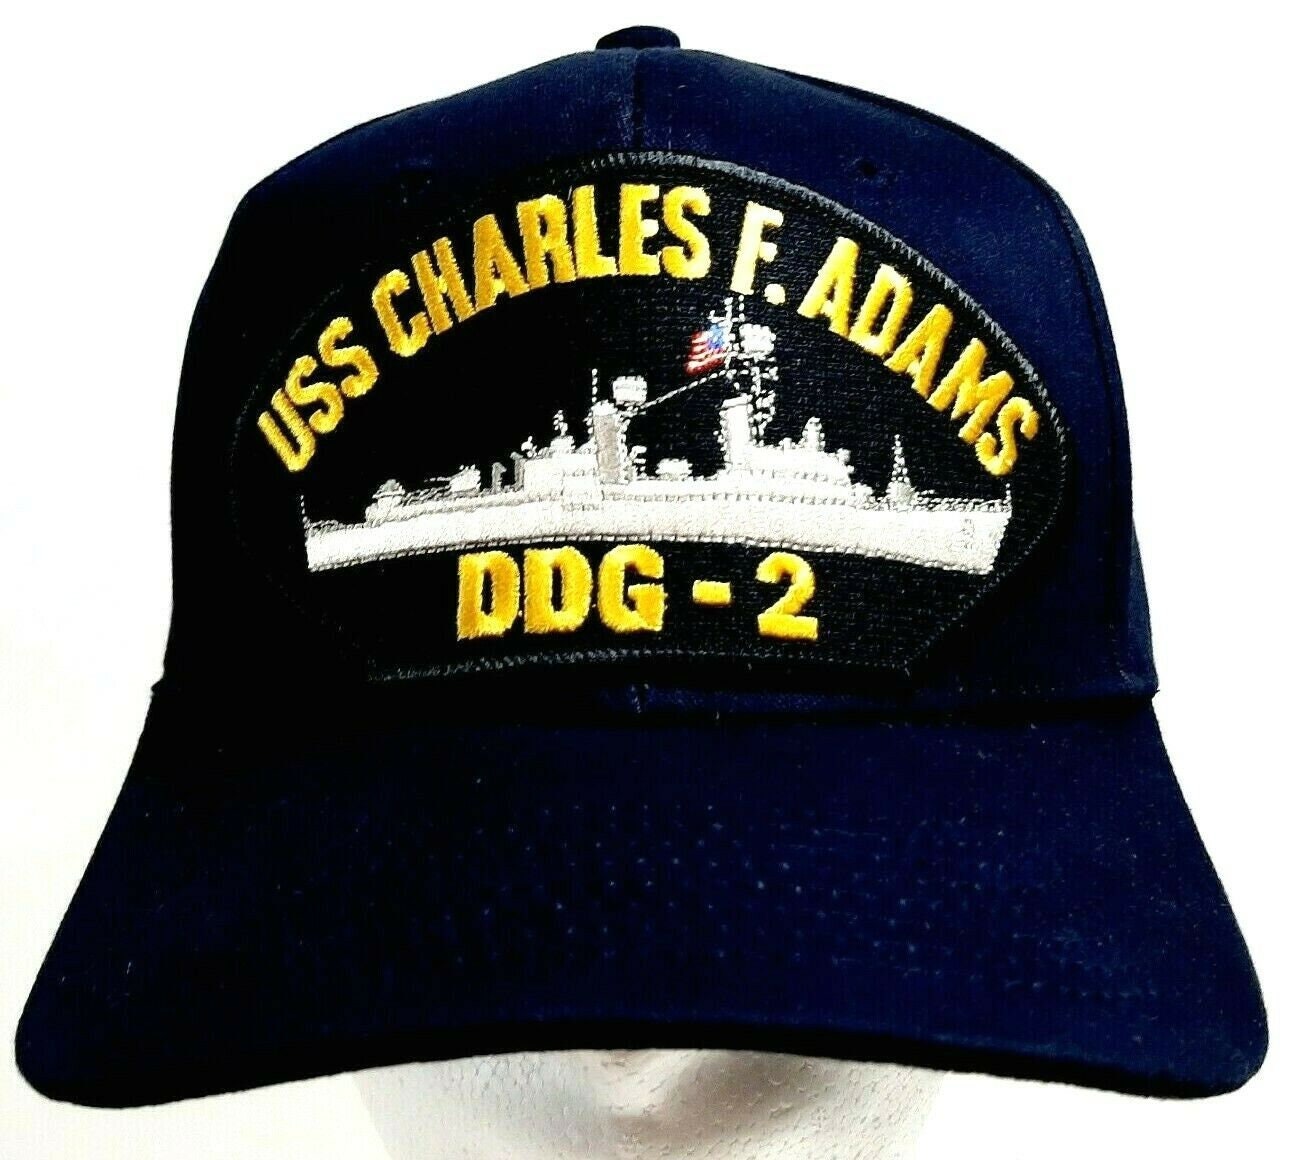 USS Charles F. Adams DDG-2 Patch Hat Baseball Cap Adjustable Navy Blue Acrylic